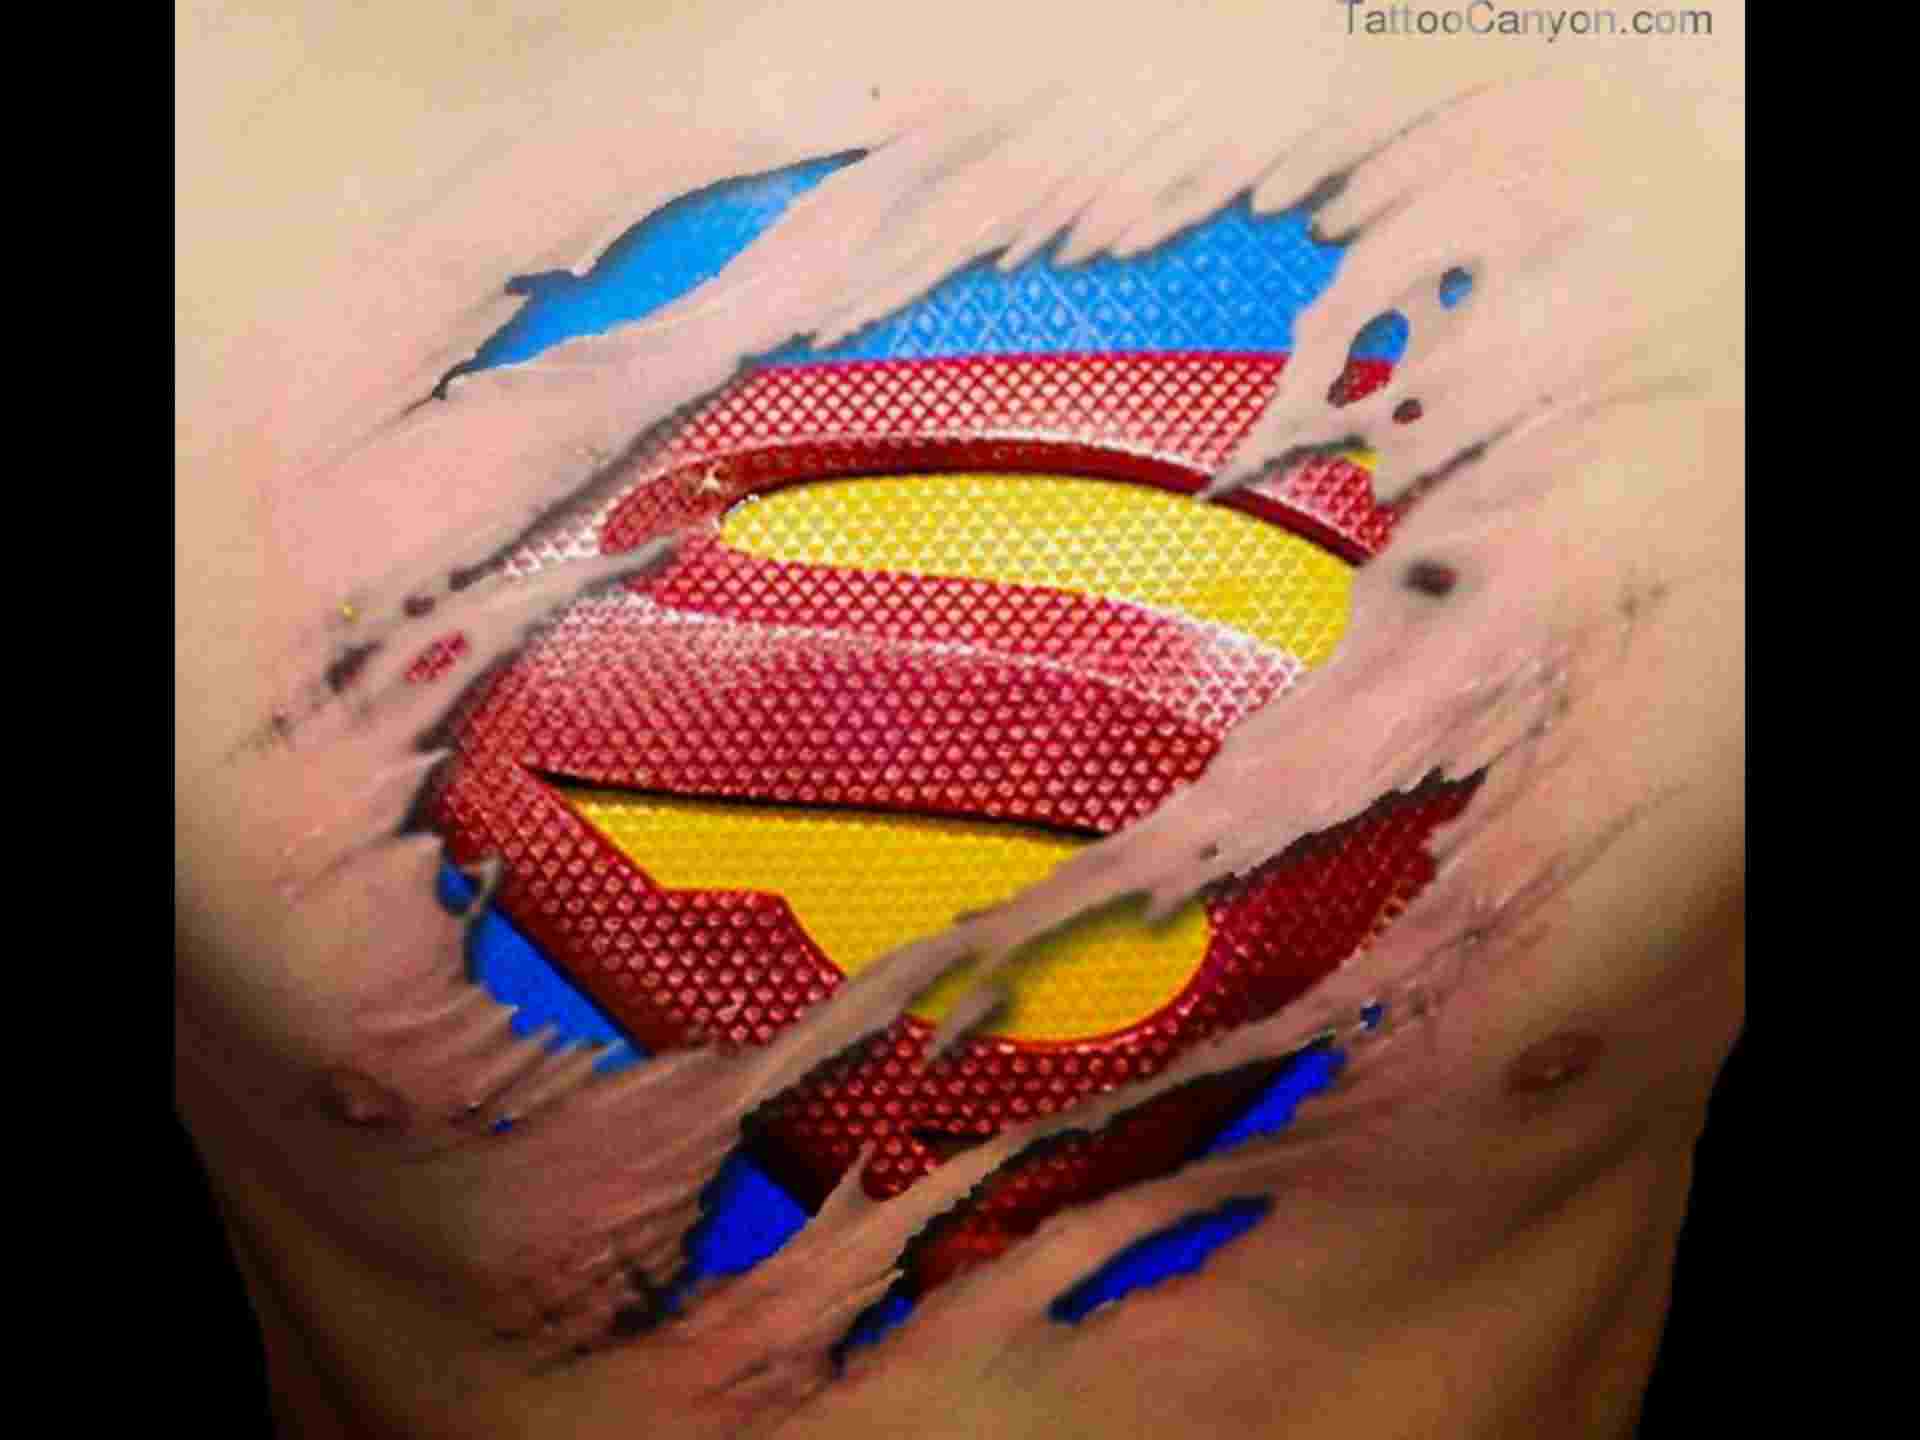 SUPERMAN LOGO” . . . . . #supermanlogotattoo #superman #süperman #dccomics  #dcfans #superheroes #tattoostyle #comics #supermanfan | Instagram